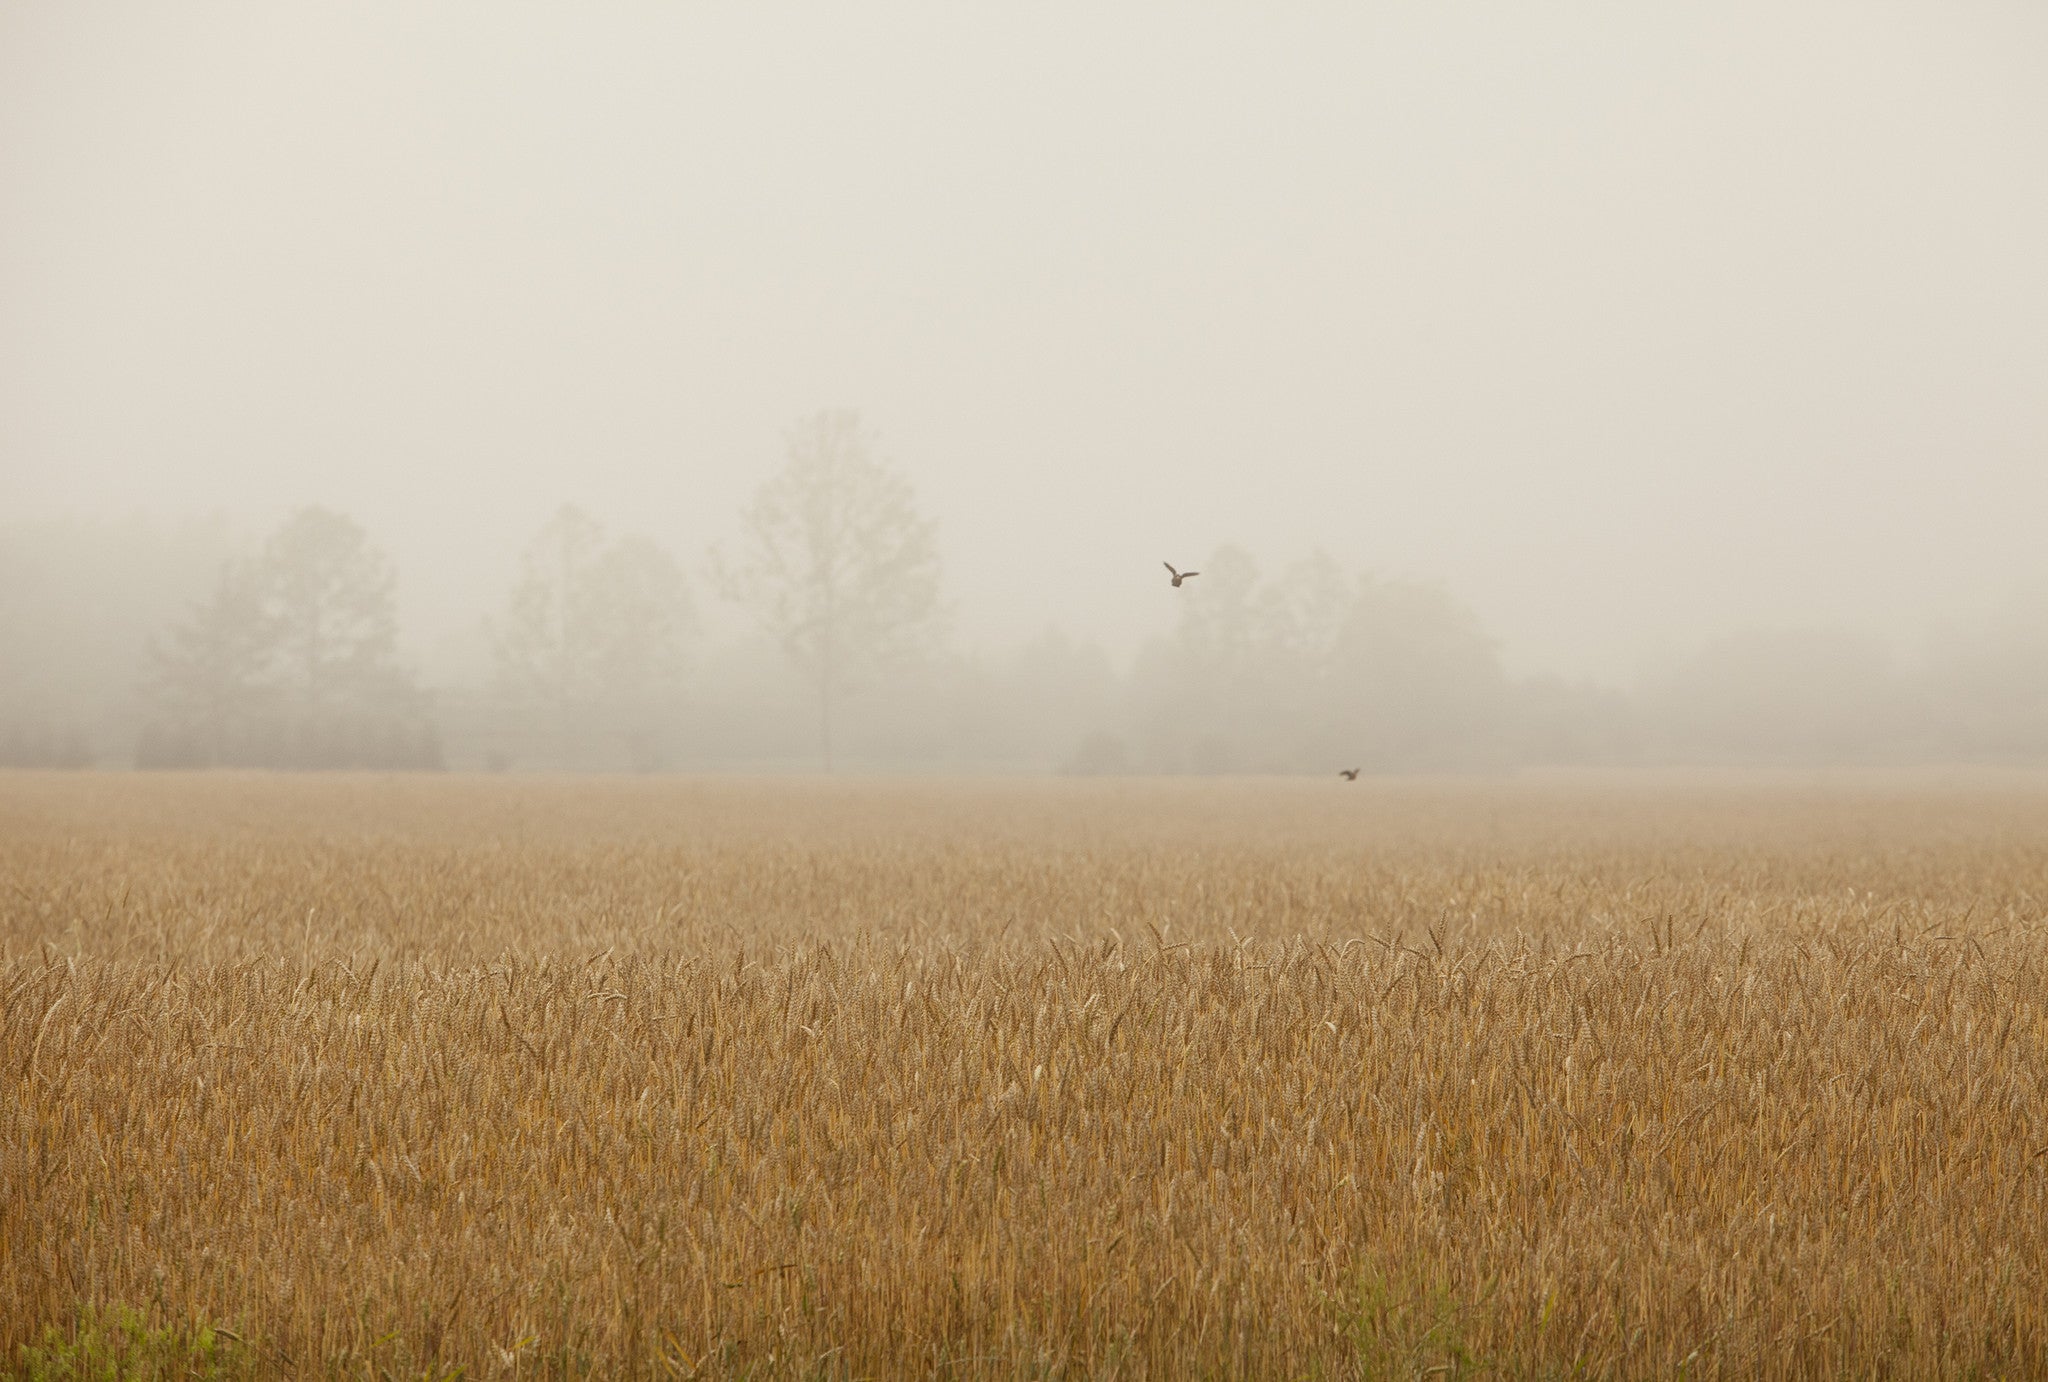 Foggy Fields, by Michael Williams